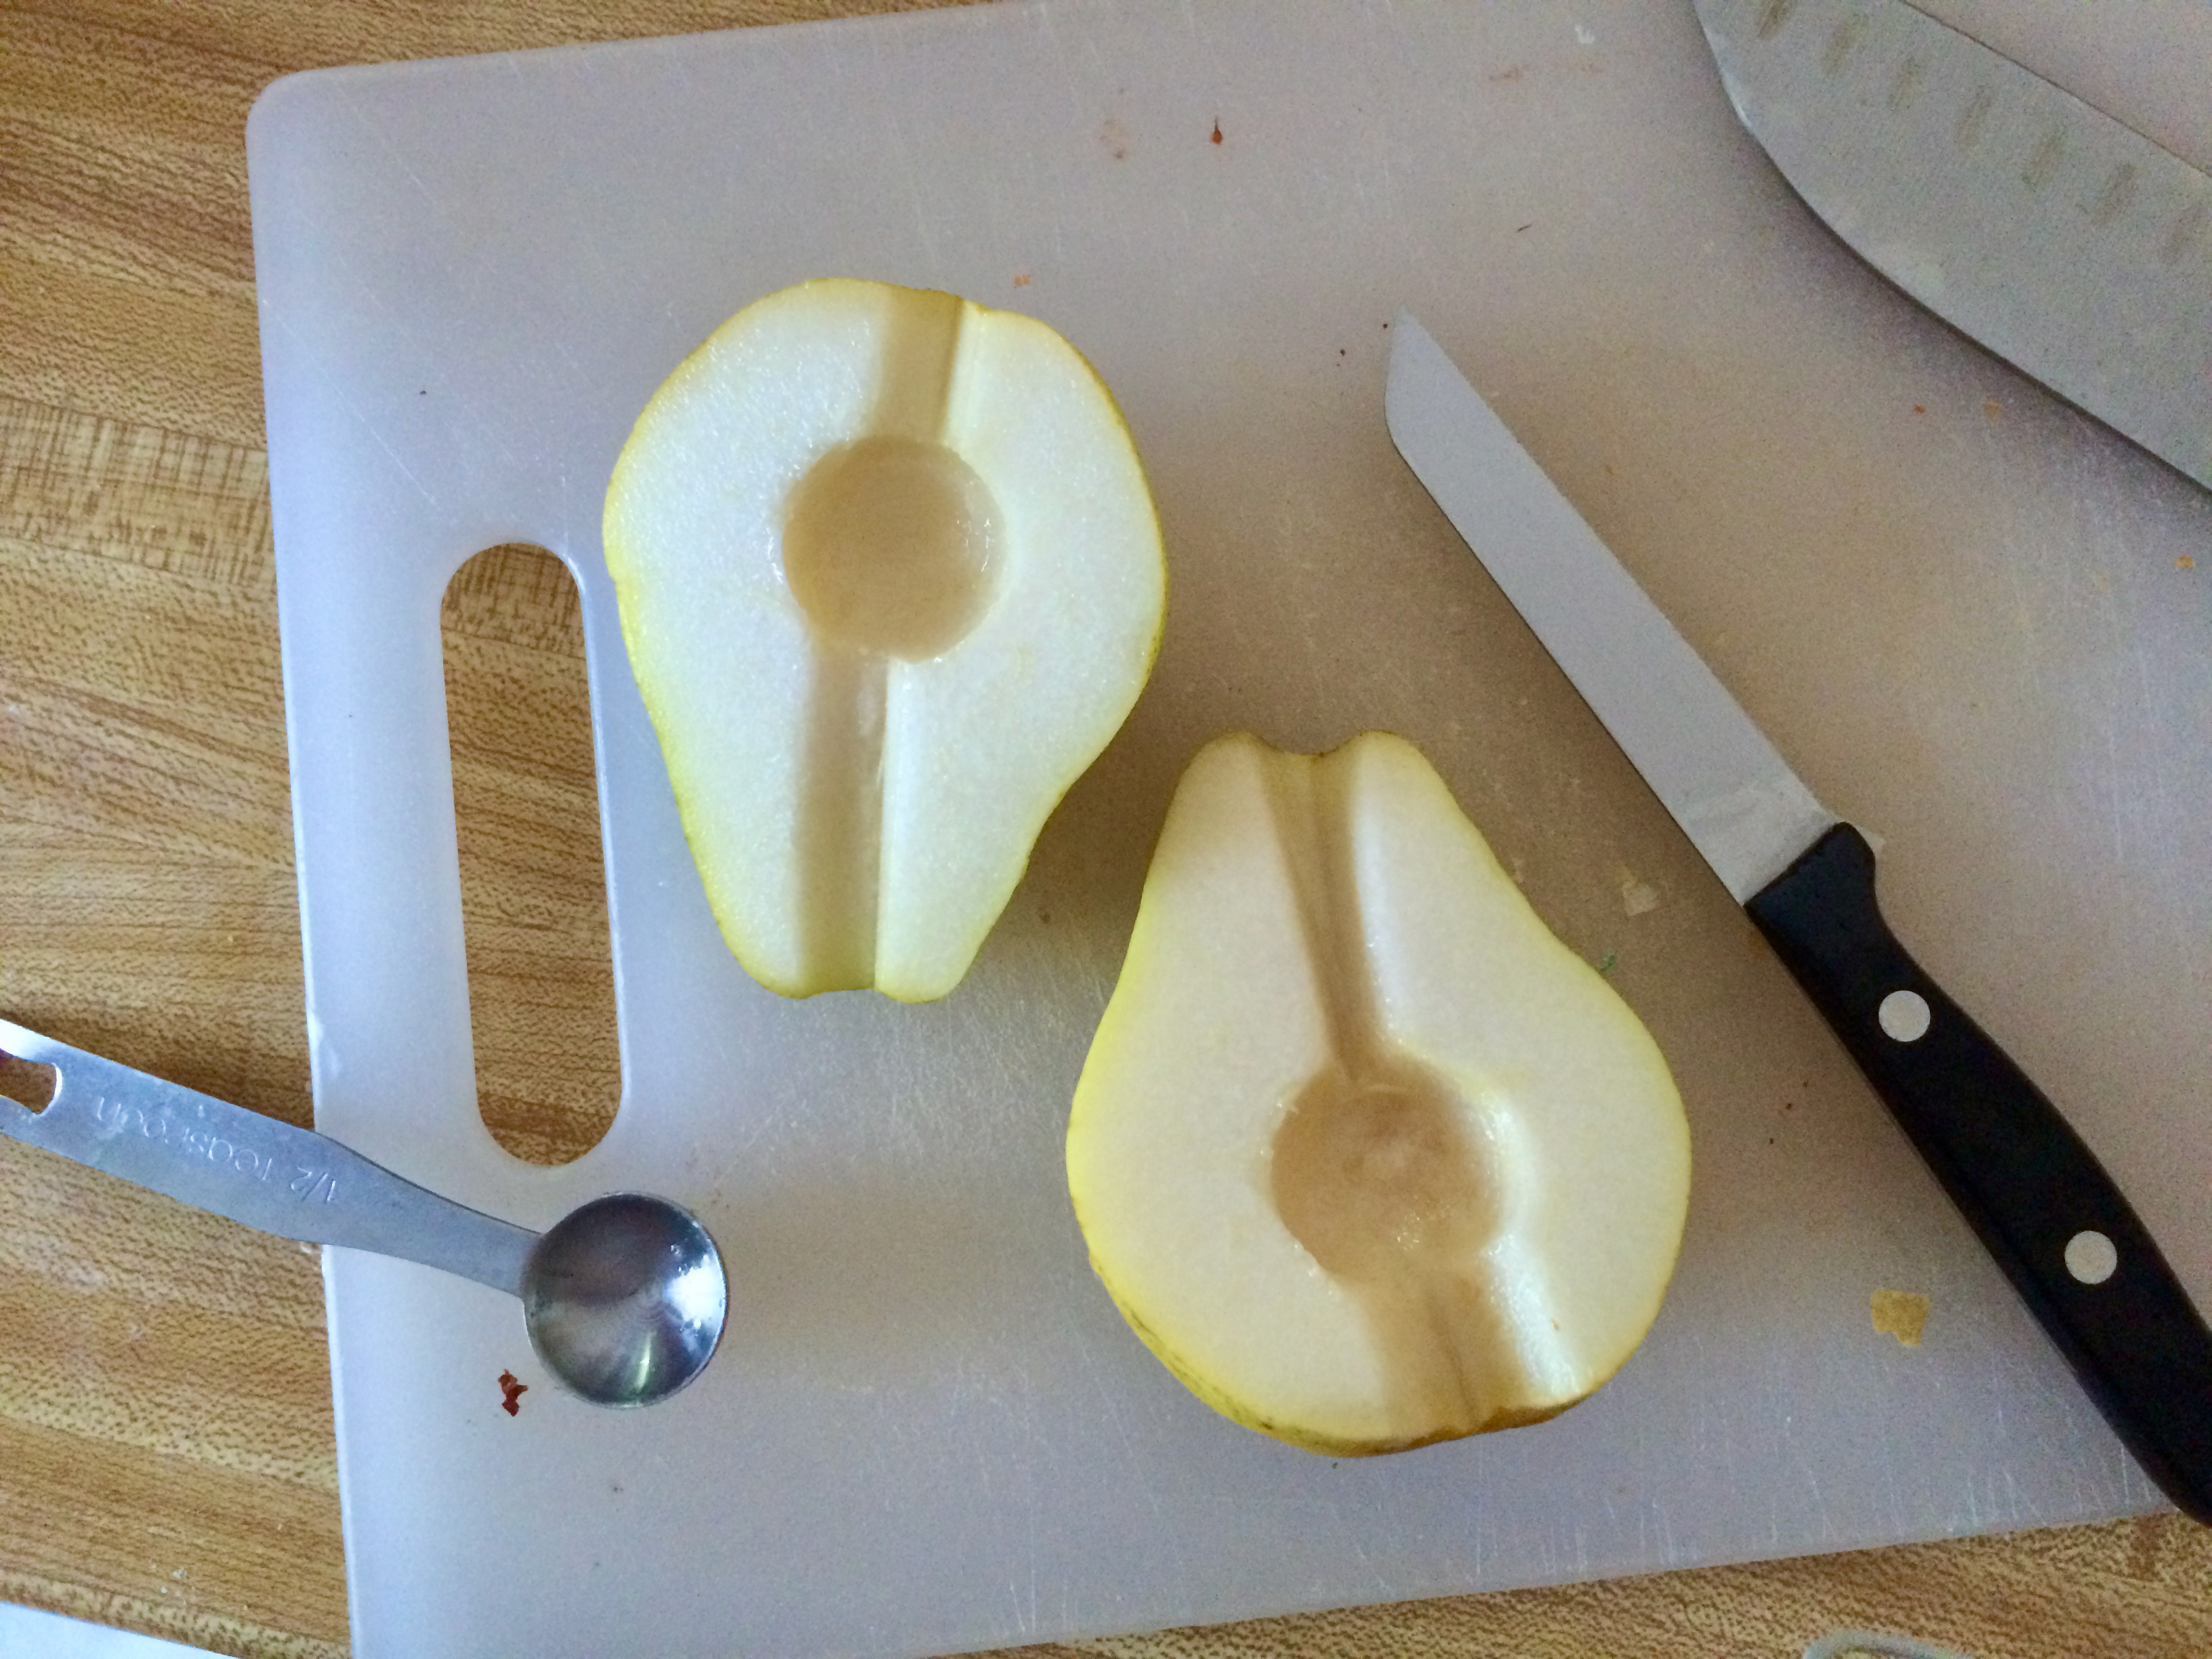 A pear cut in half.